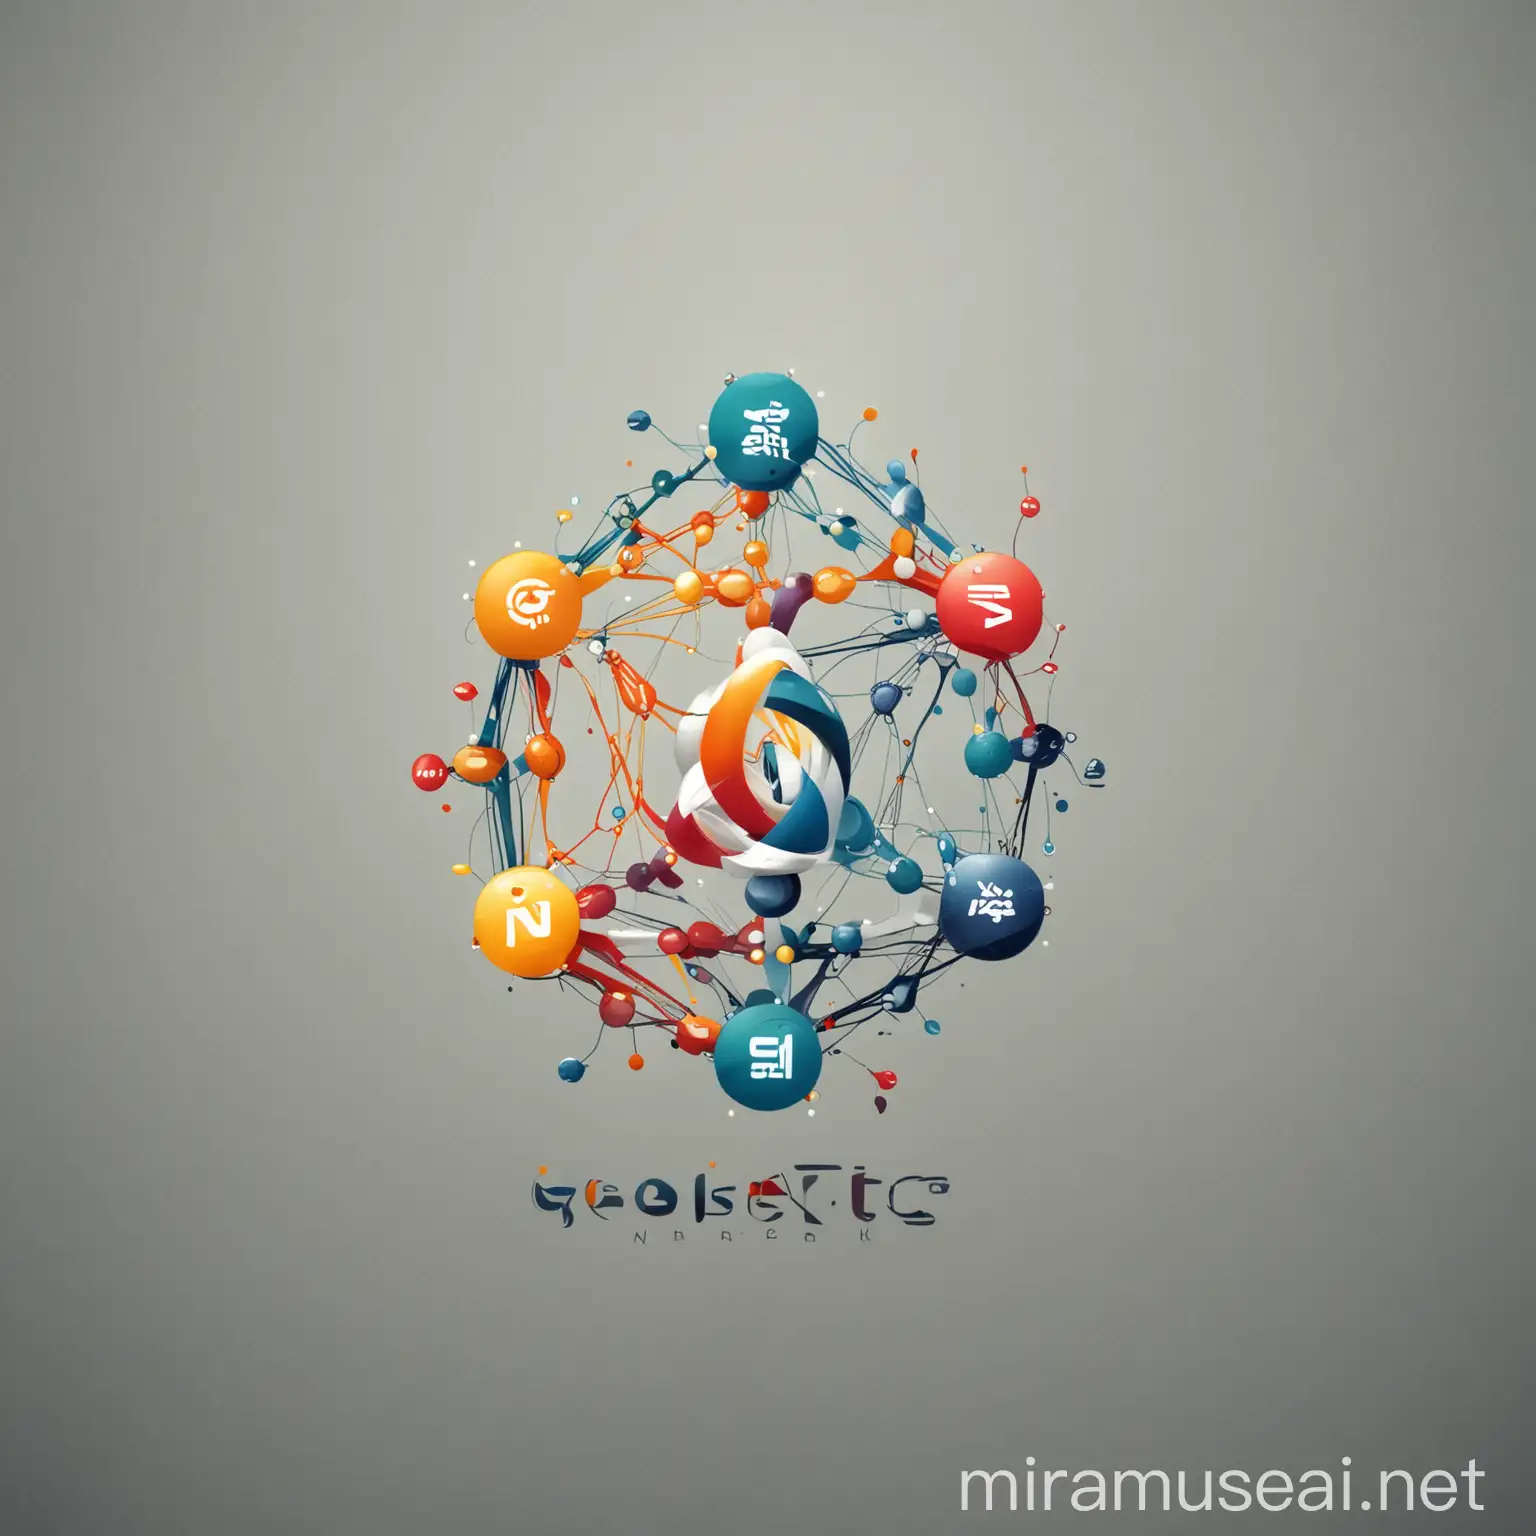 Abstract Genetic Network Logo Design